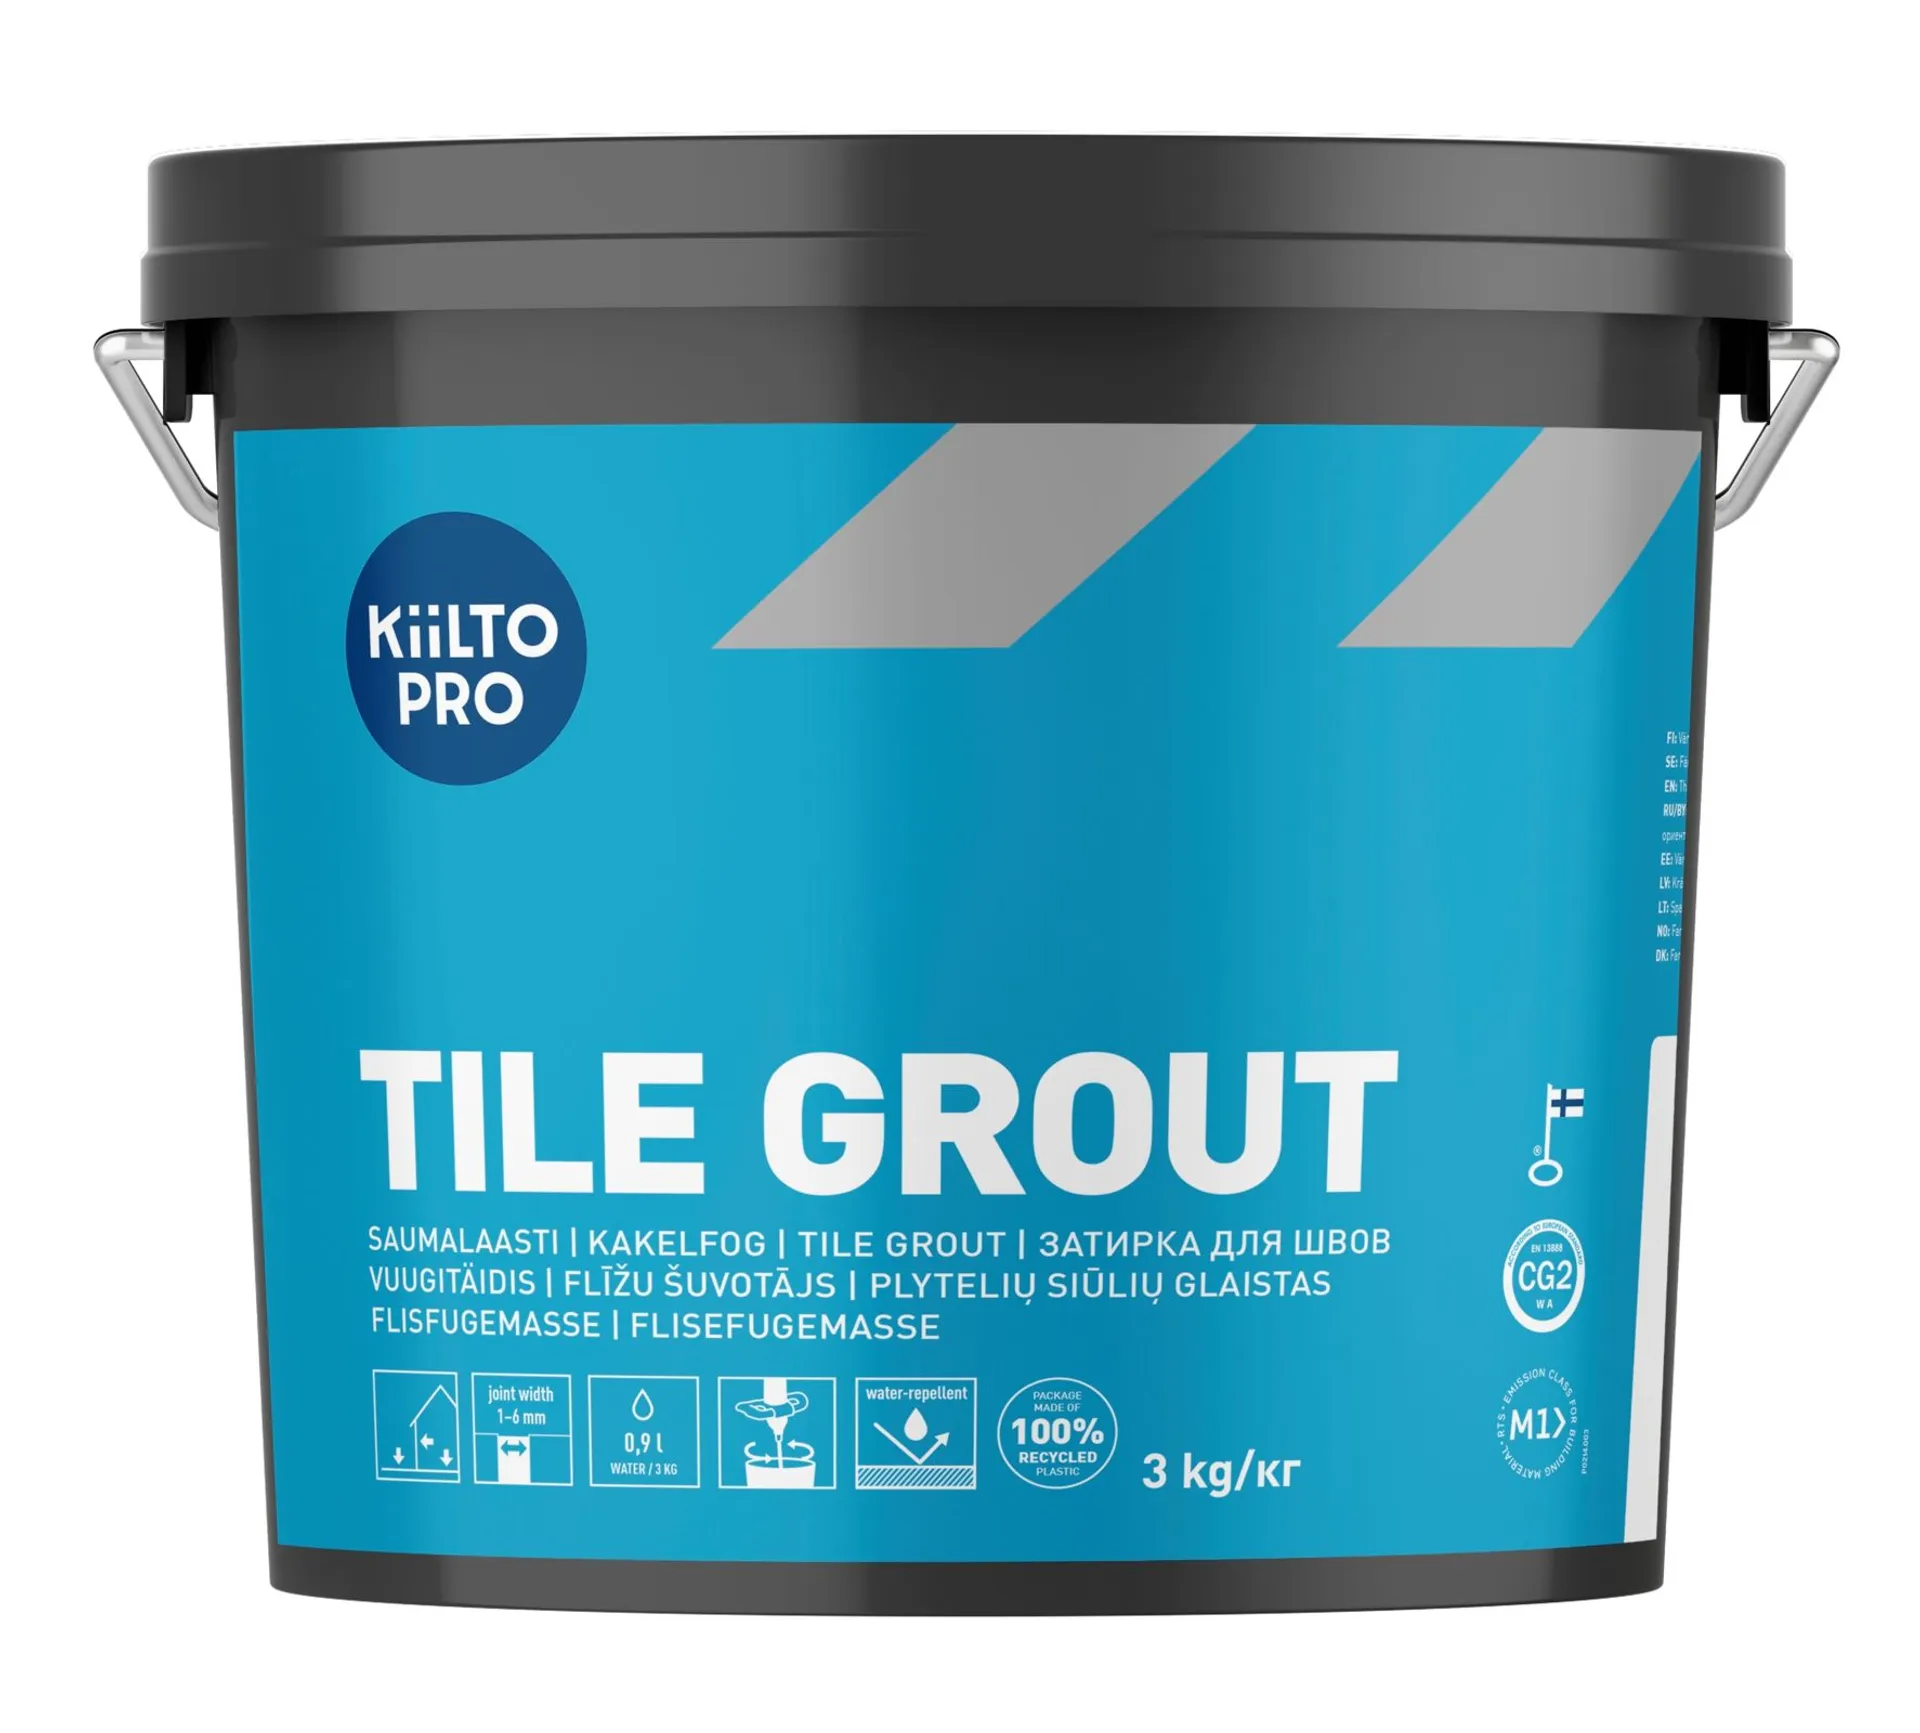 Kiilto Pro Tile grout saumalaasti 39 marble white  3 kg